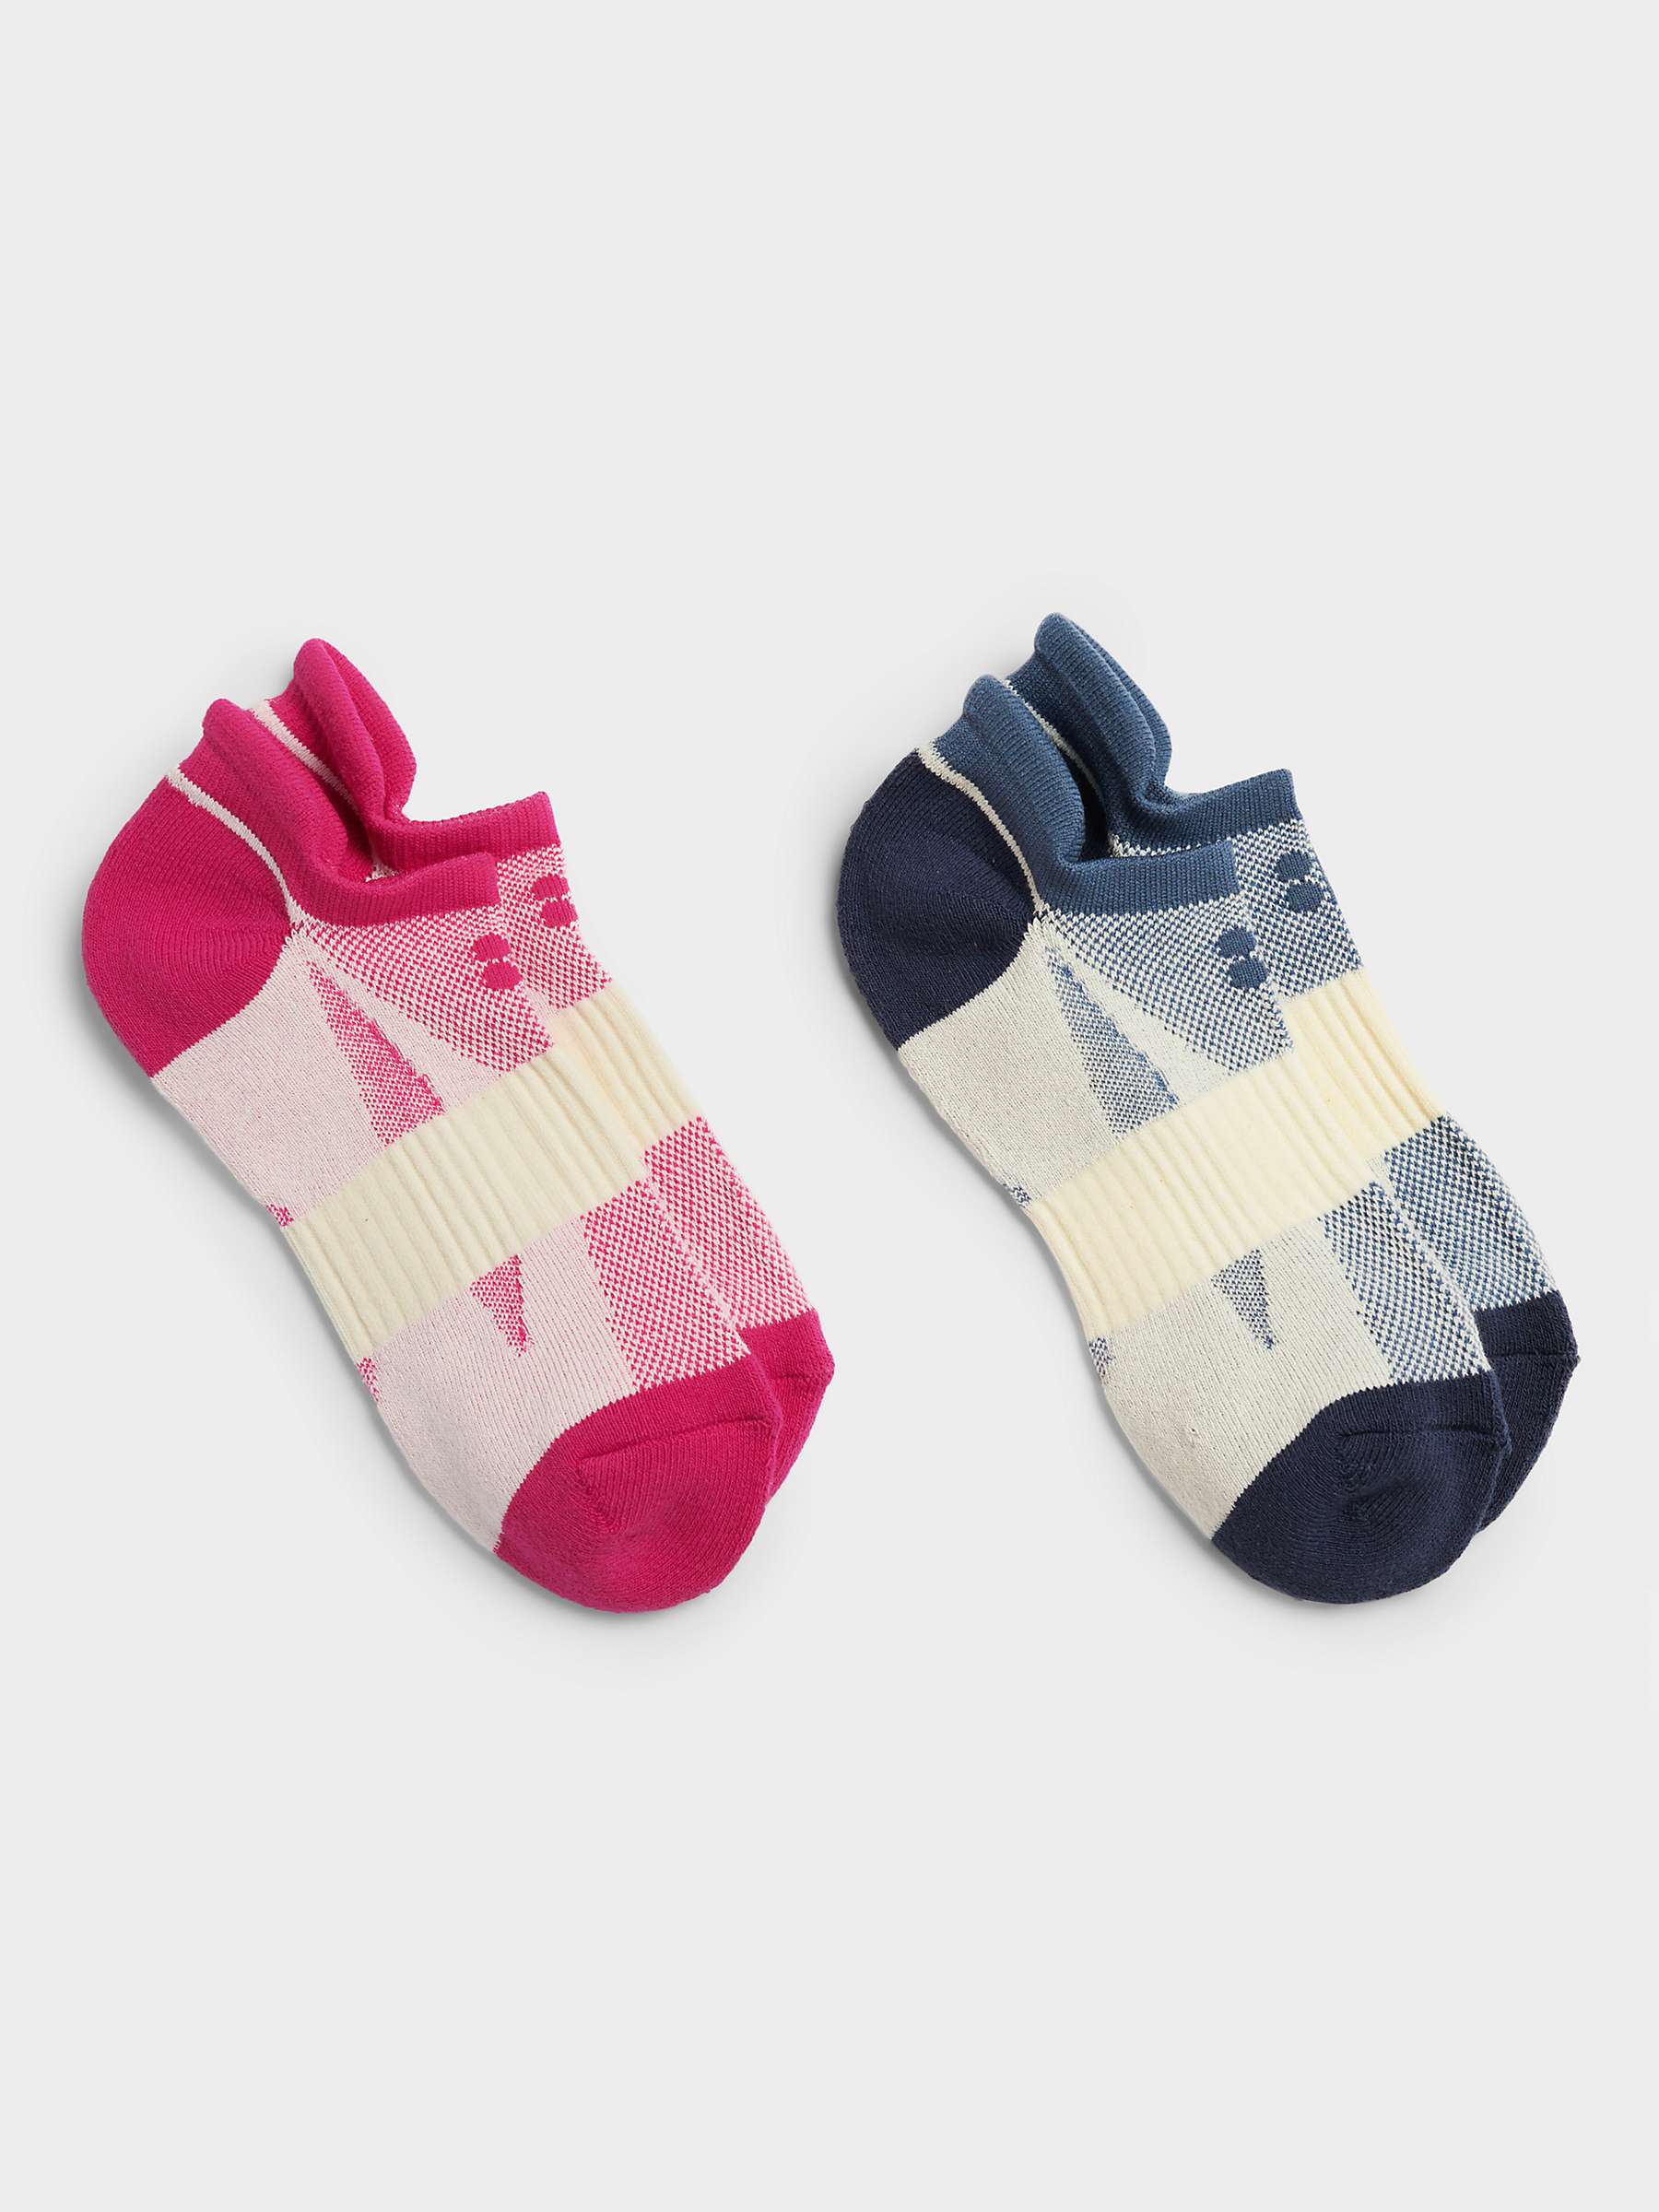 Buy Sweaty Betty Technical Run Organic Cotton Trainer Socks, Pack of 2, Beet Pink/Blue Online at johnlewis.com